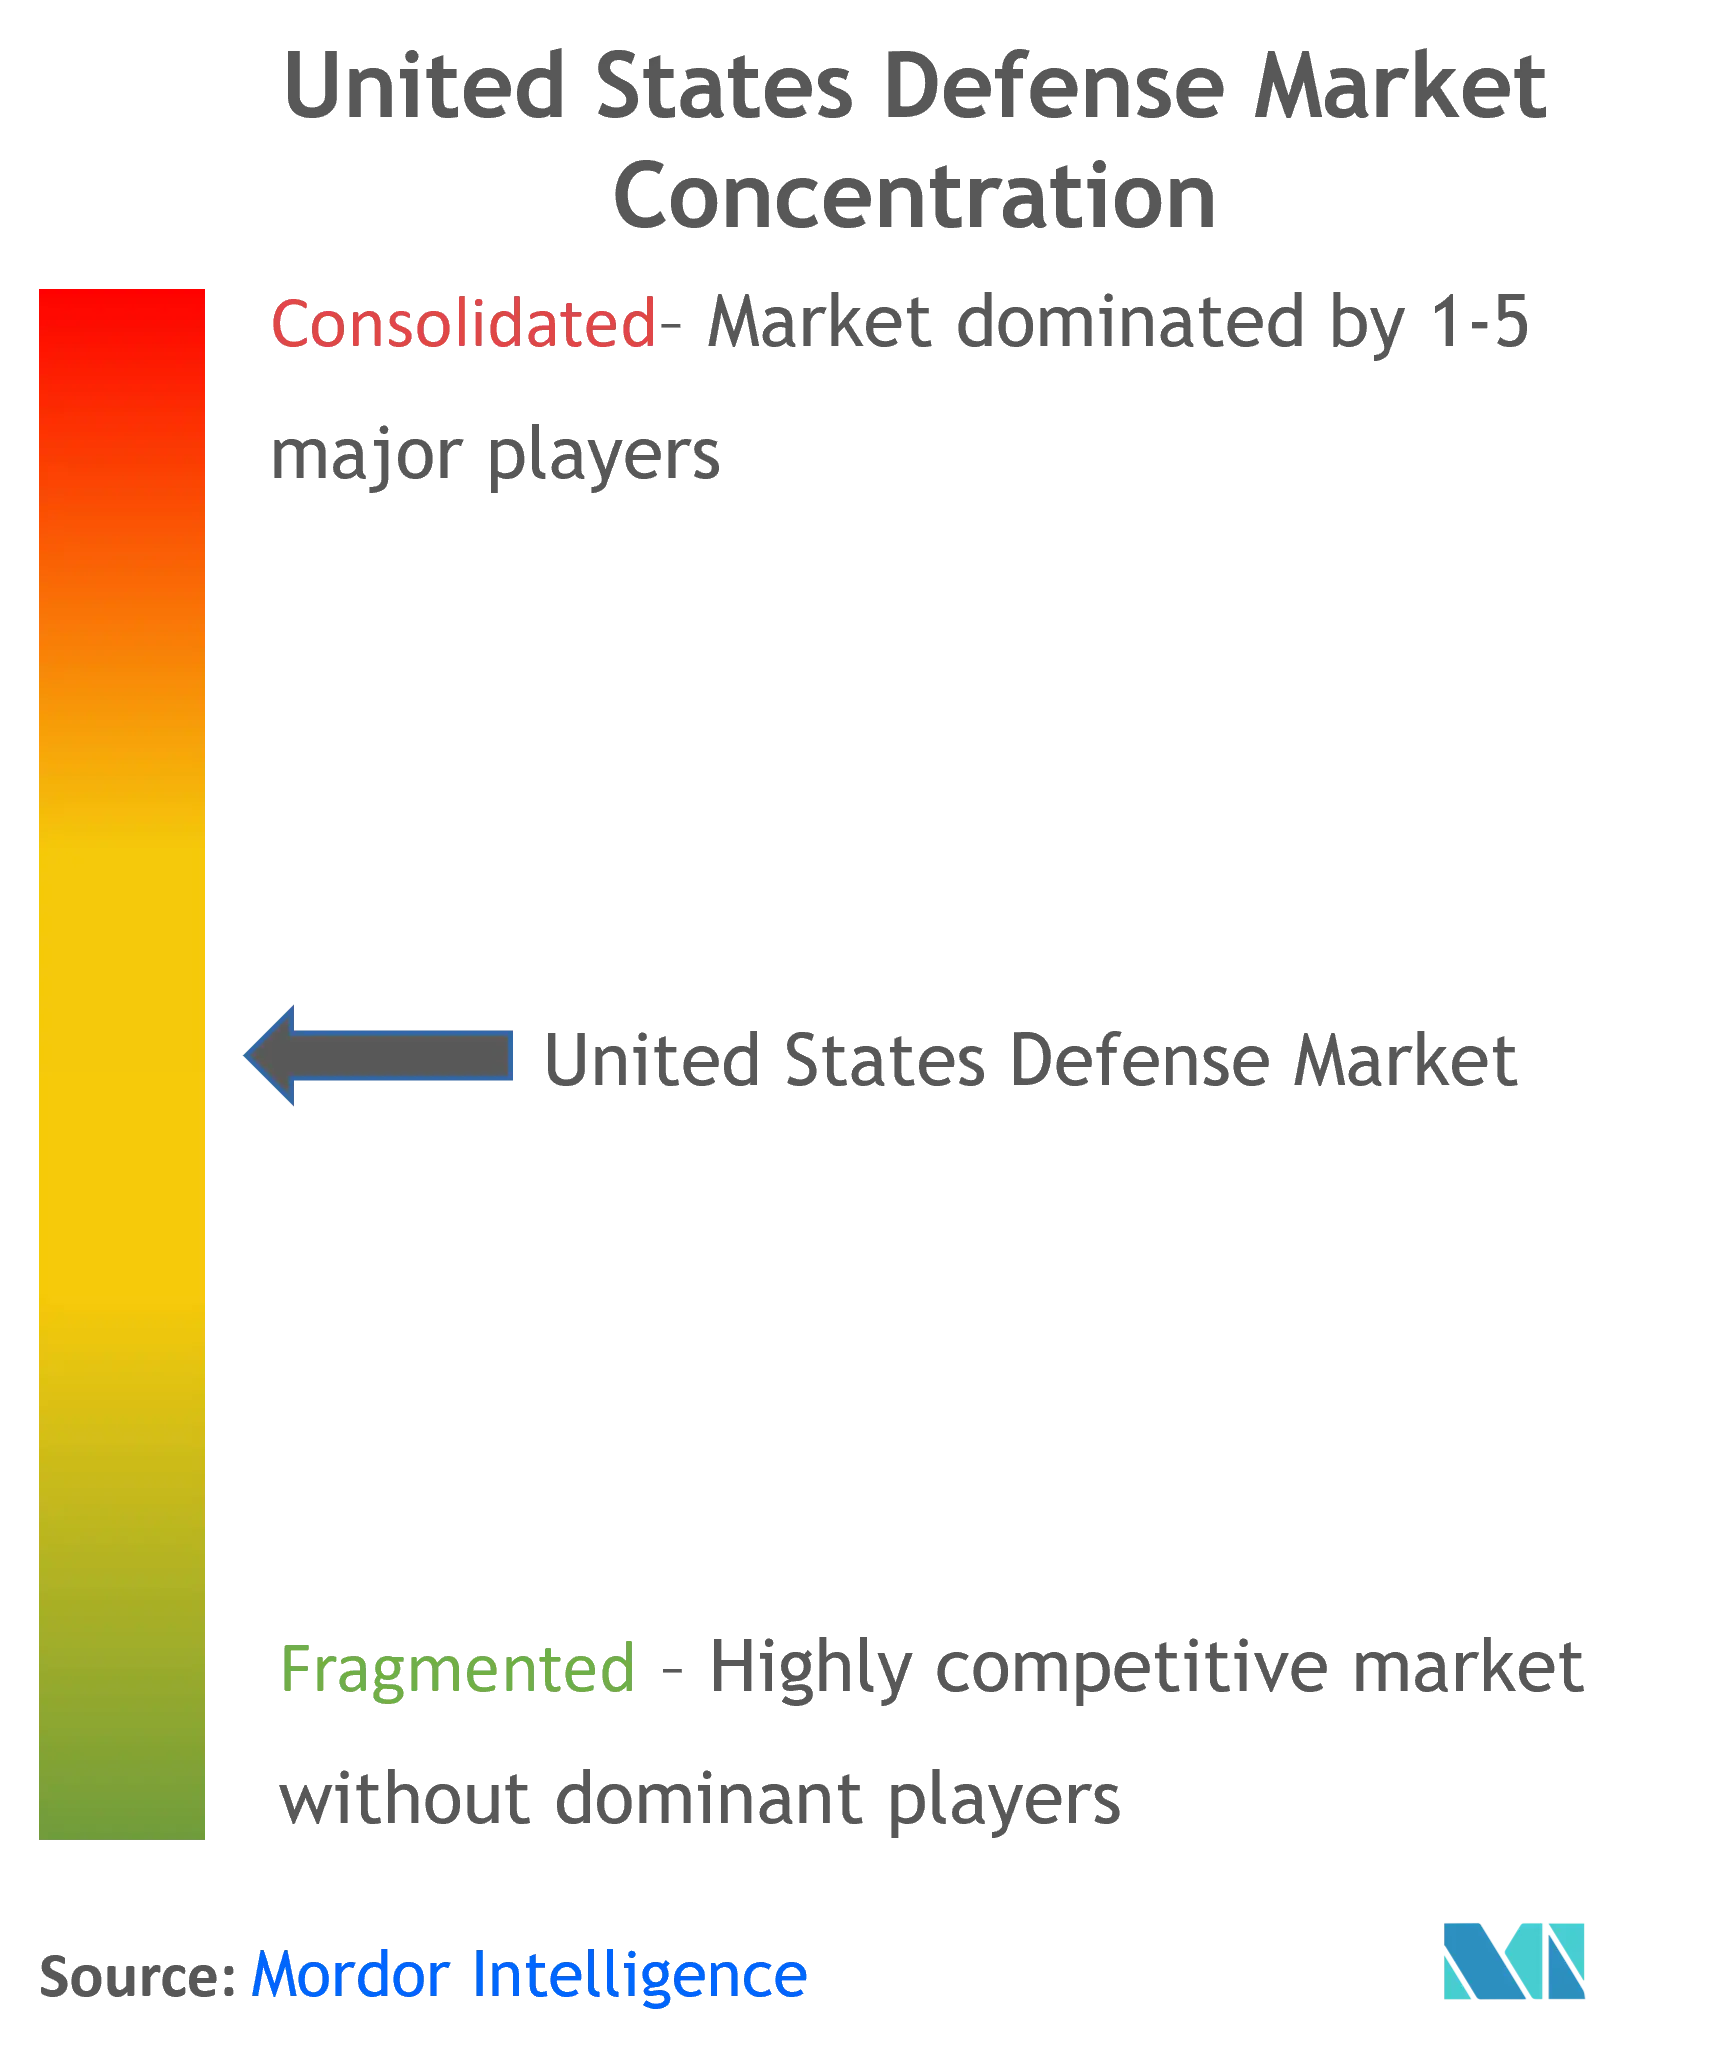 US Defense Market Concentration